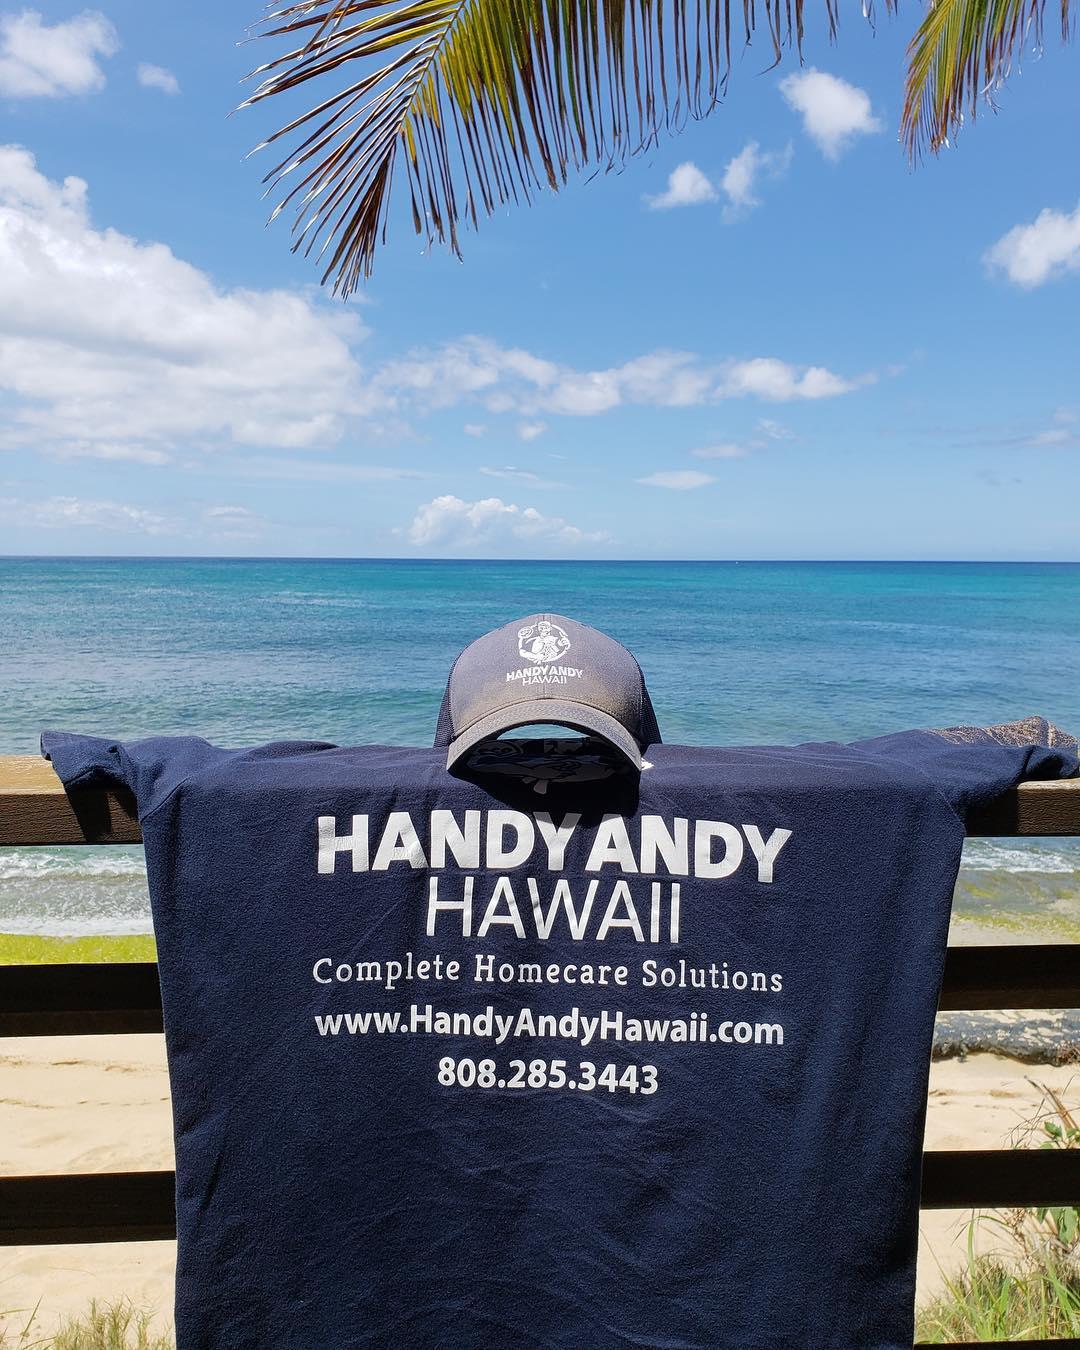 Hawaii's Handyman Company